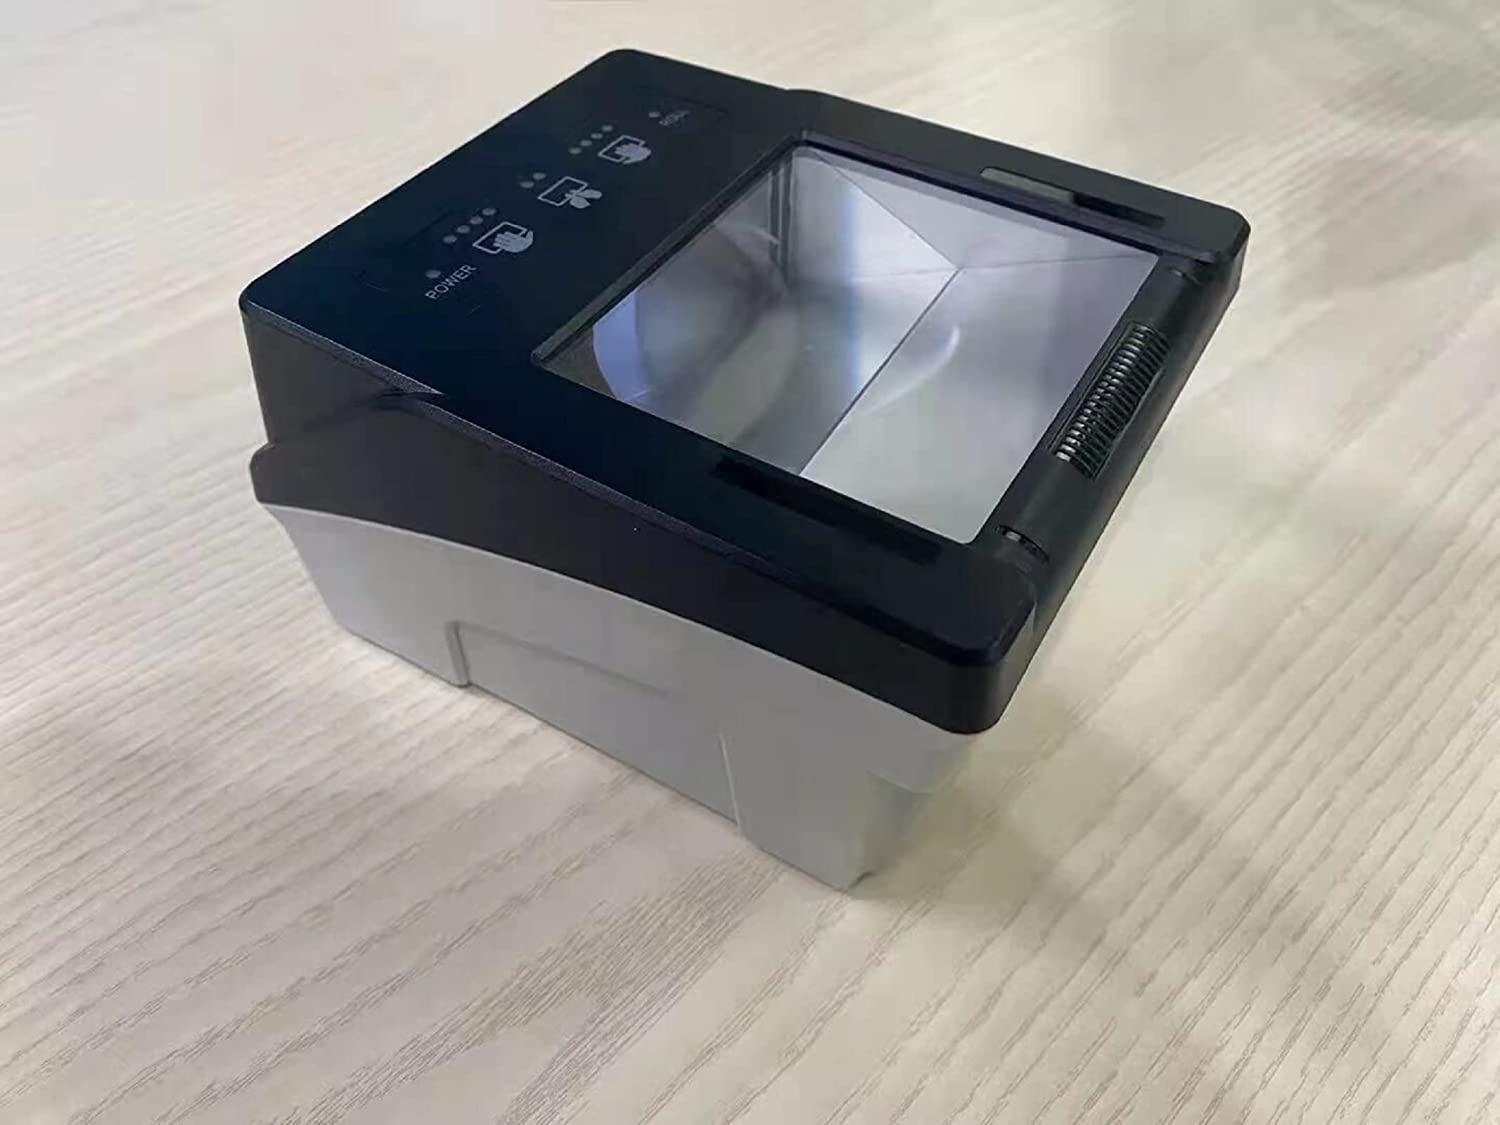 YUUSFJI JYDF500 Fingerprint Reader Livescanner Ultra-Thin Optical Four-Finger Fingerprint Collector The Smallest and Most Compact Scanner